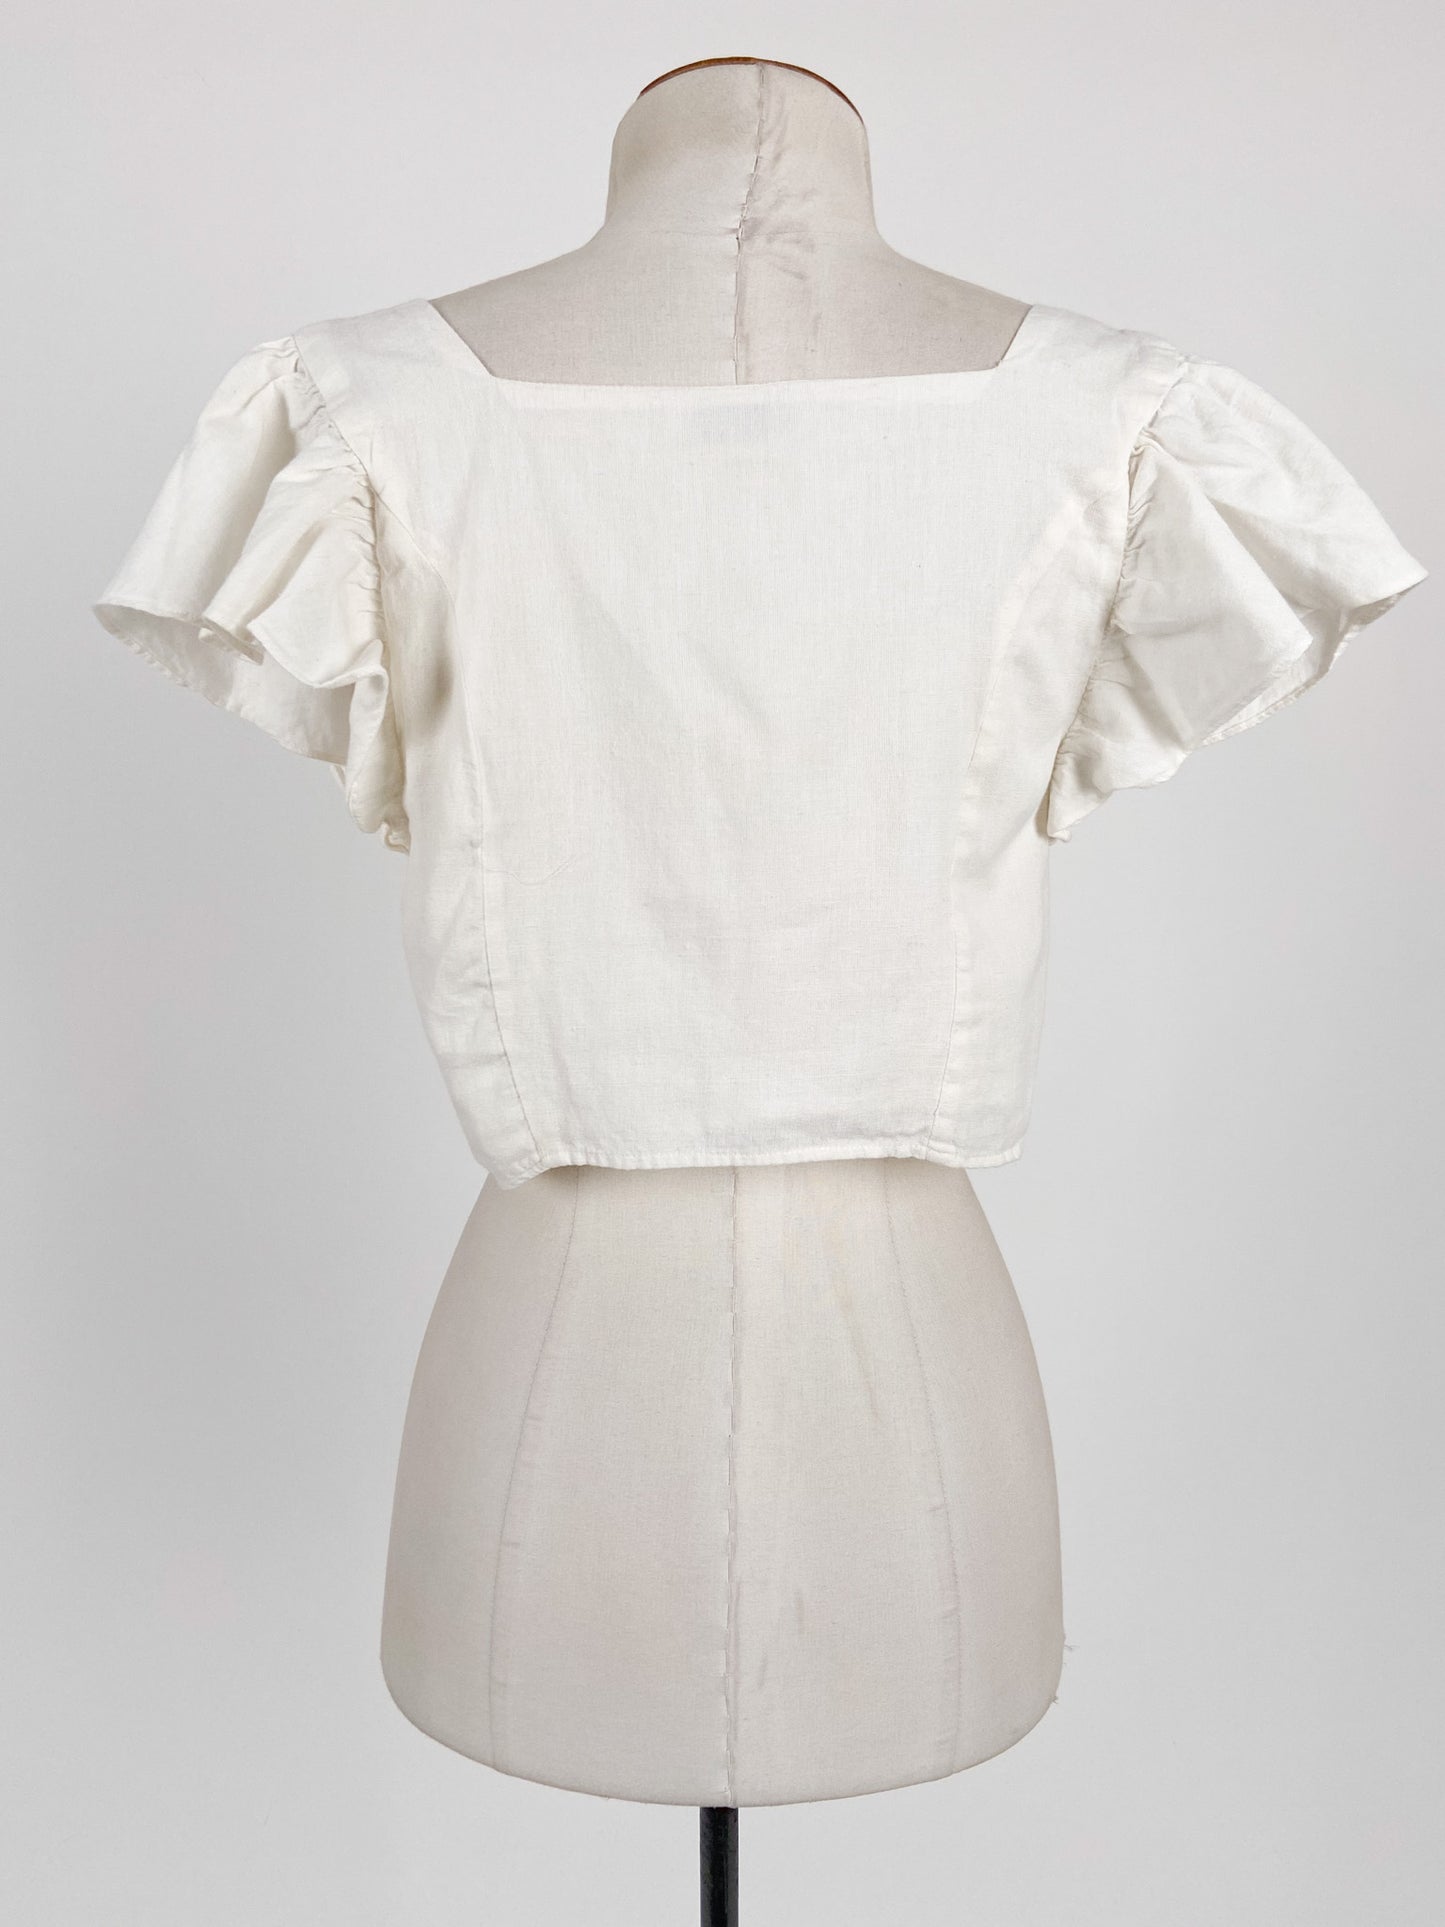 Zara | White Casual Top | Size XS